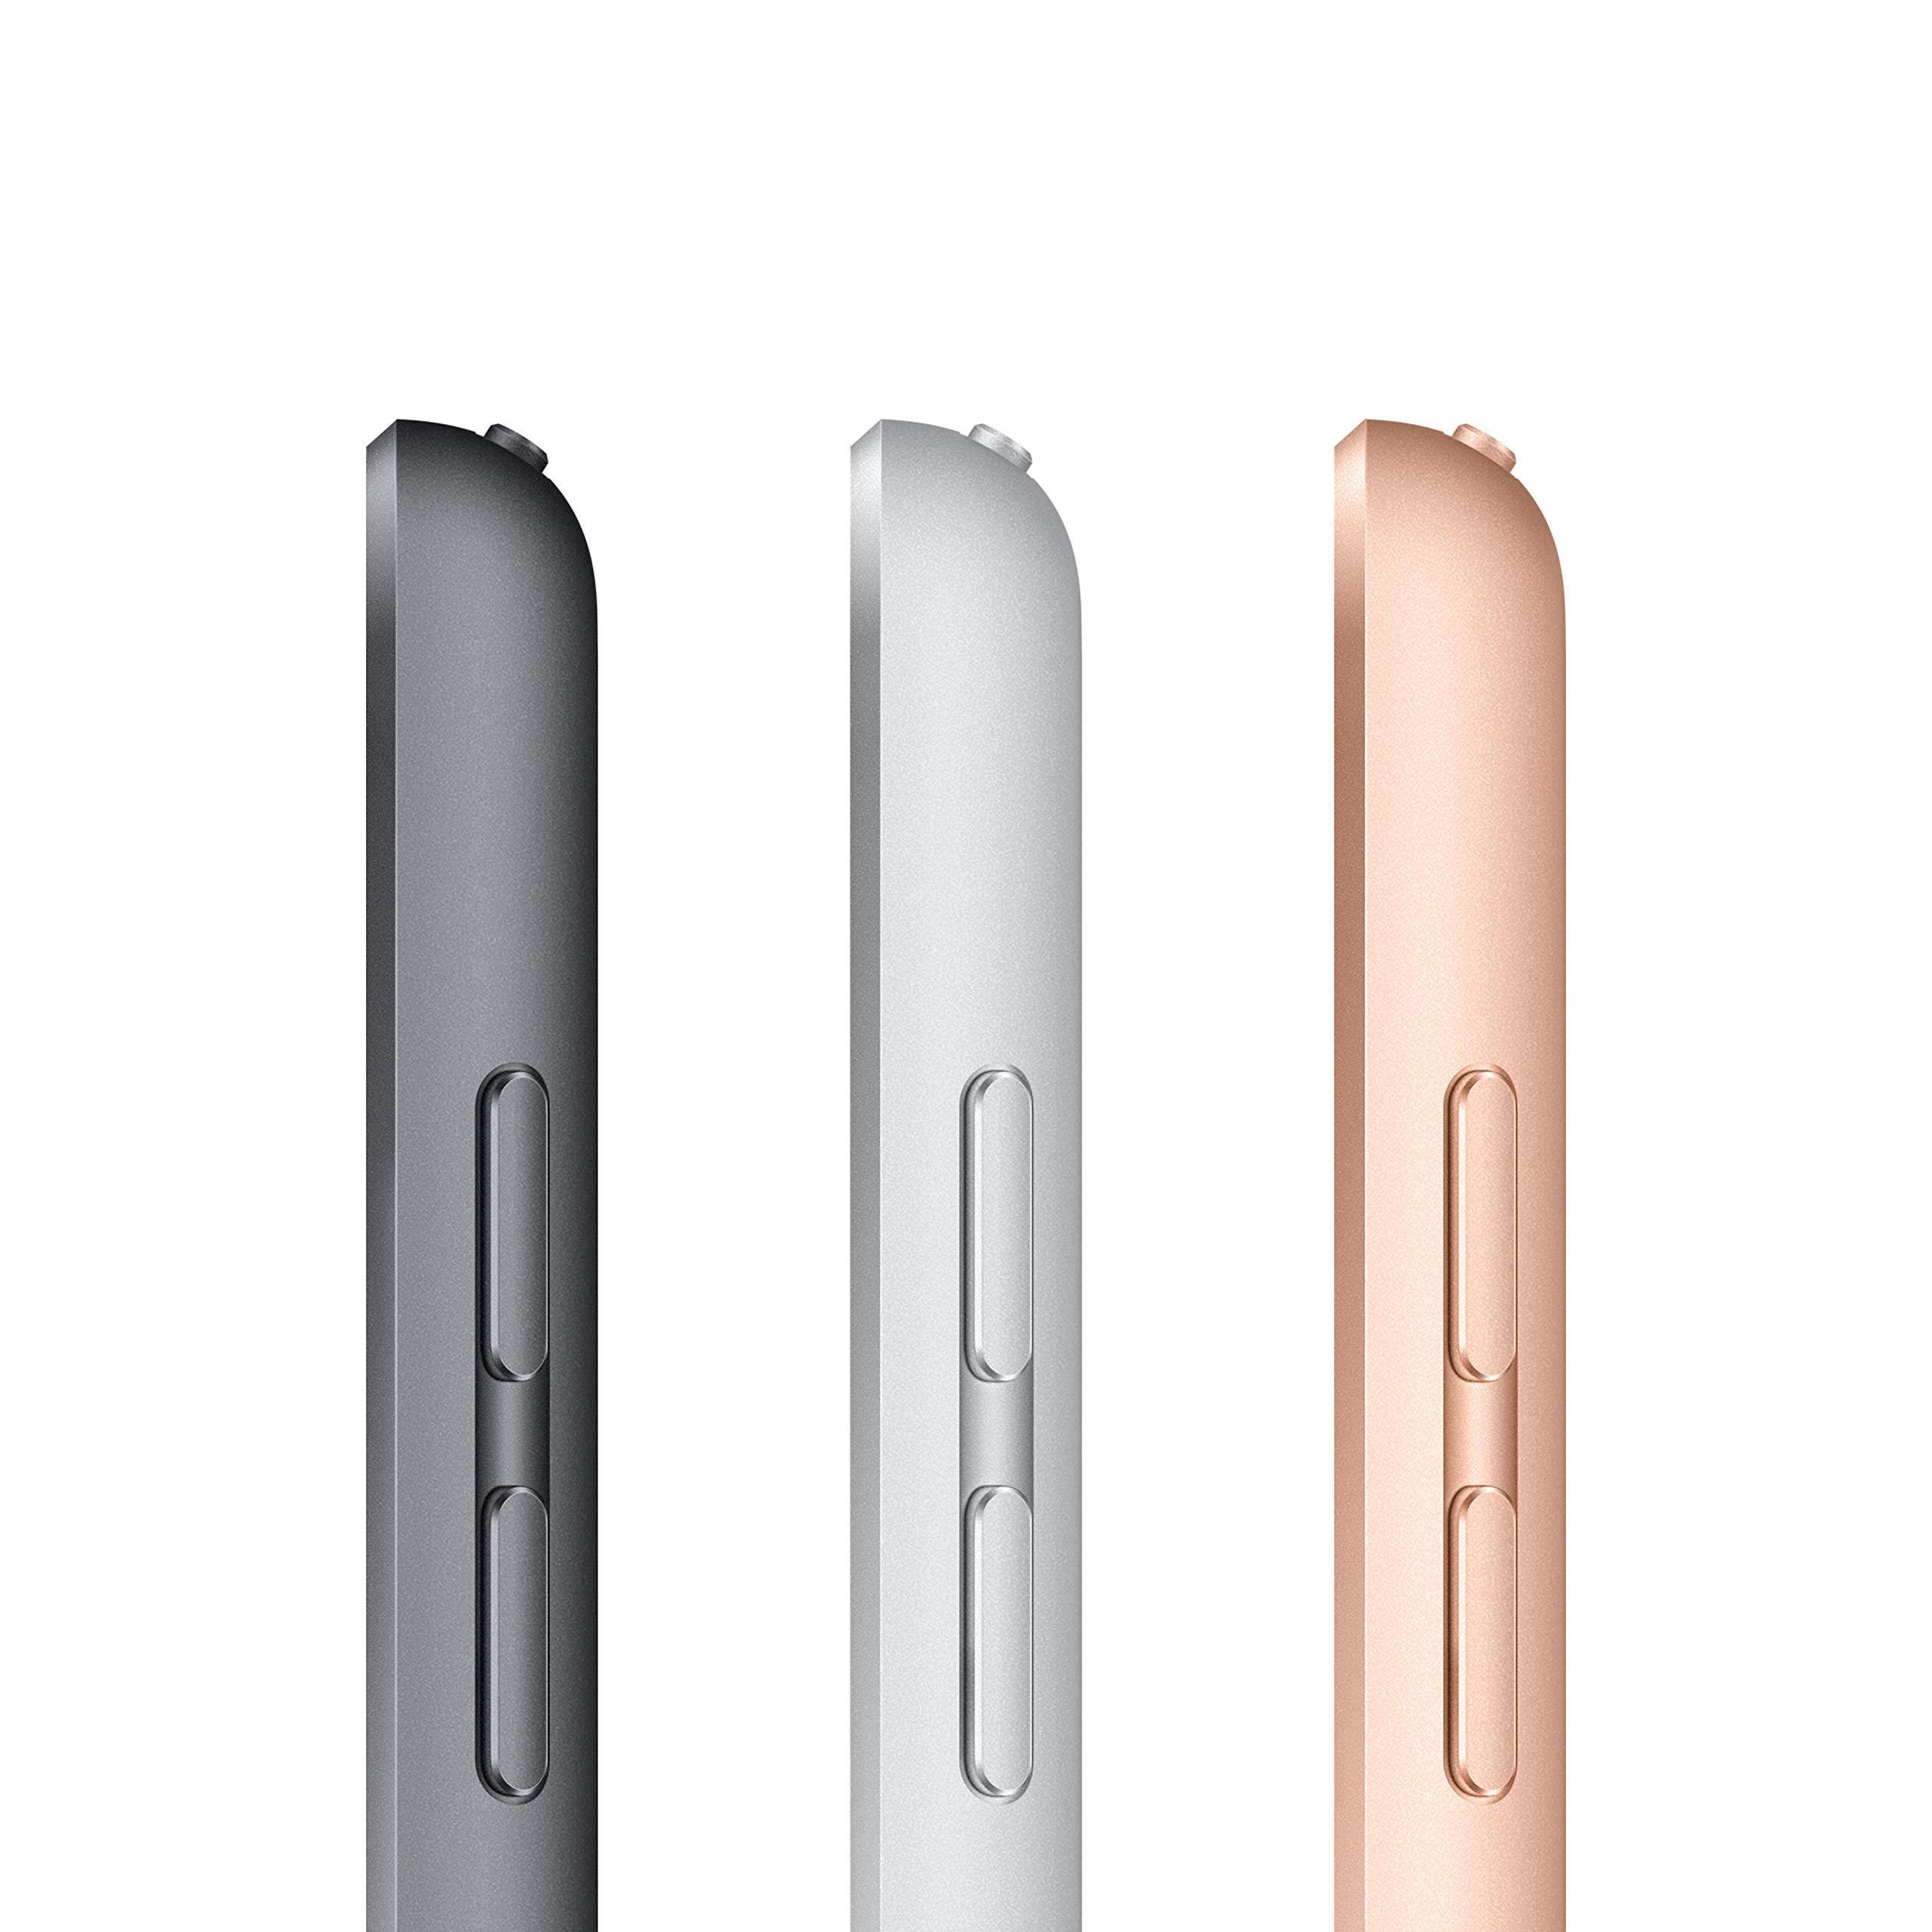 Apple 2020 iPad (10.2-inch, Wi-Fi, 32GB) - Space Gray (8th Generation)